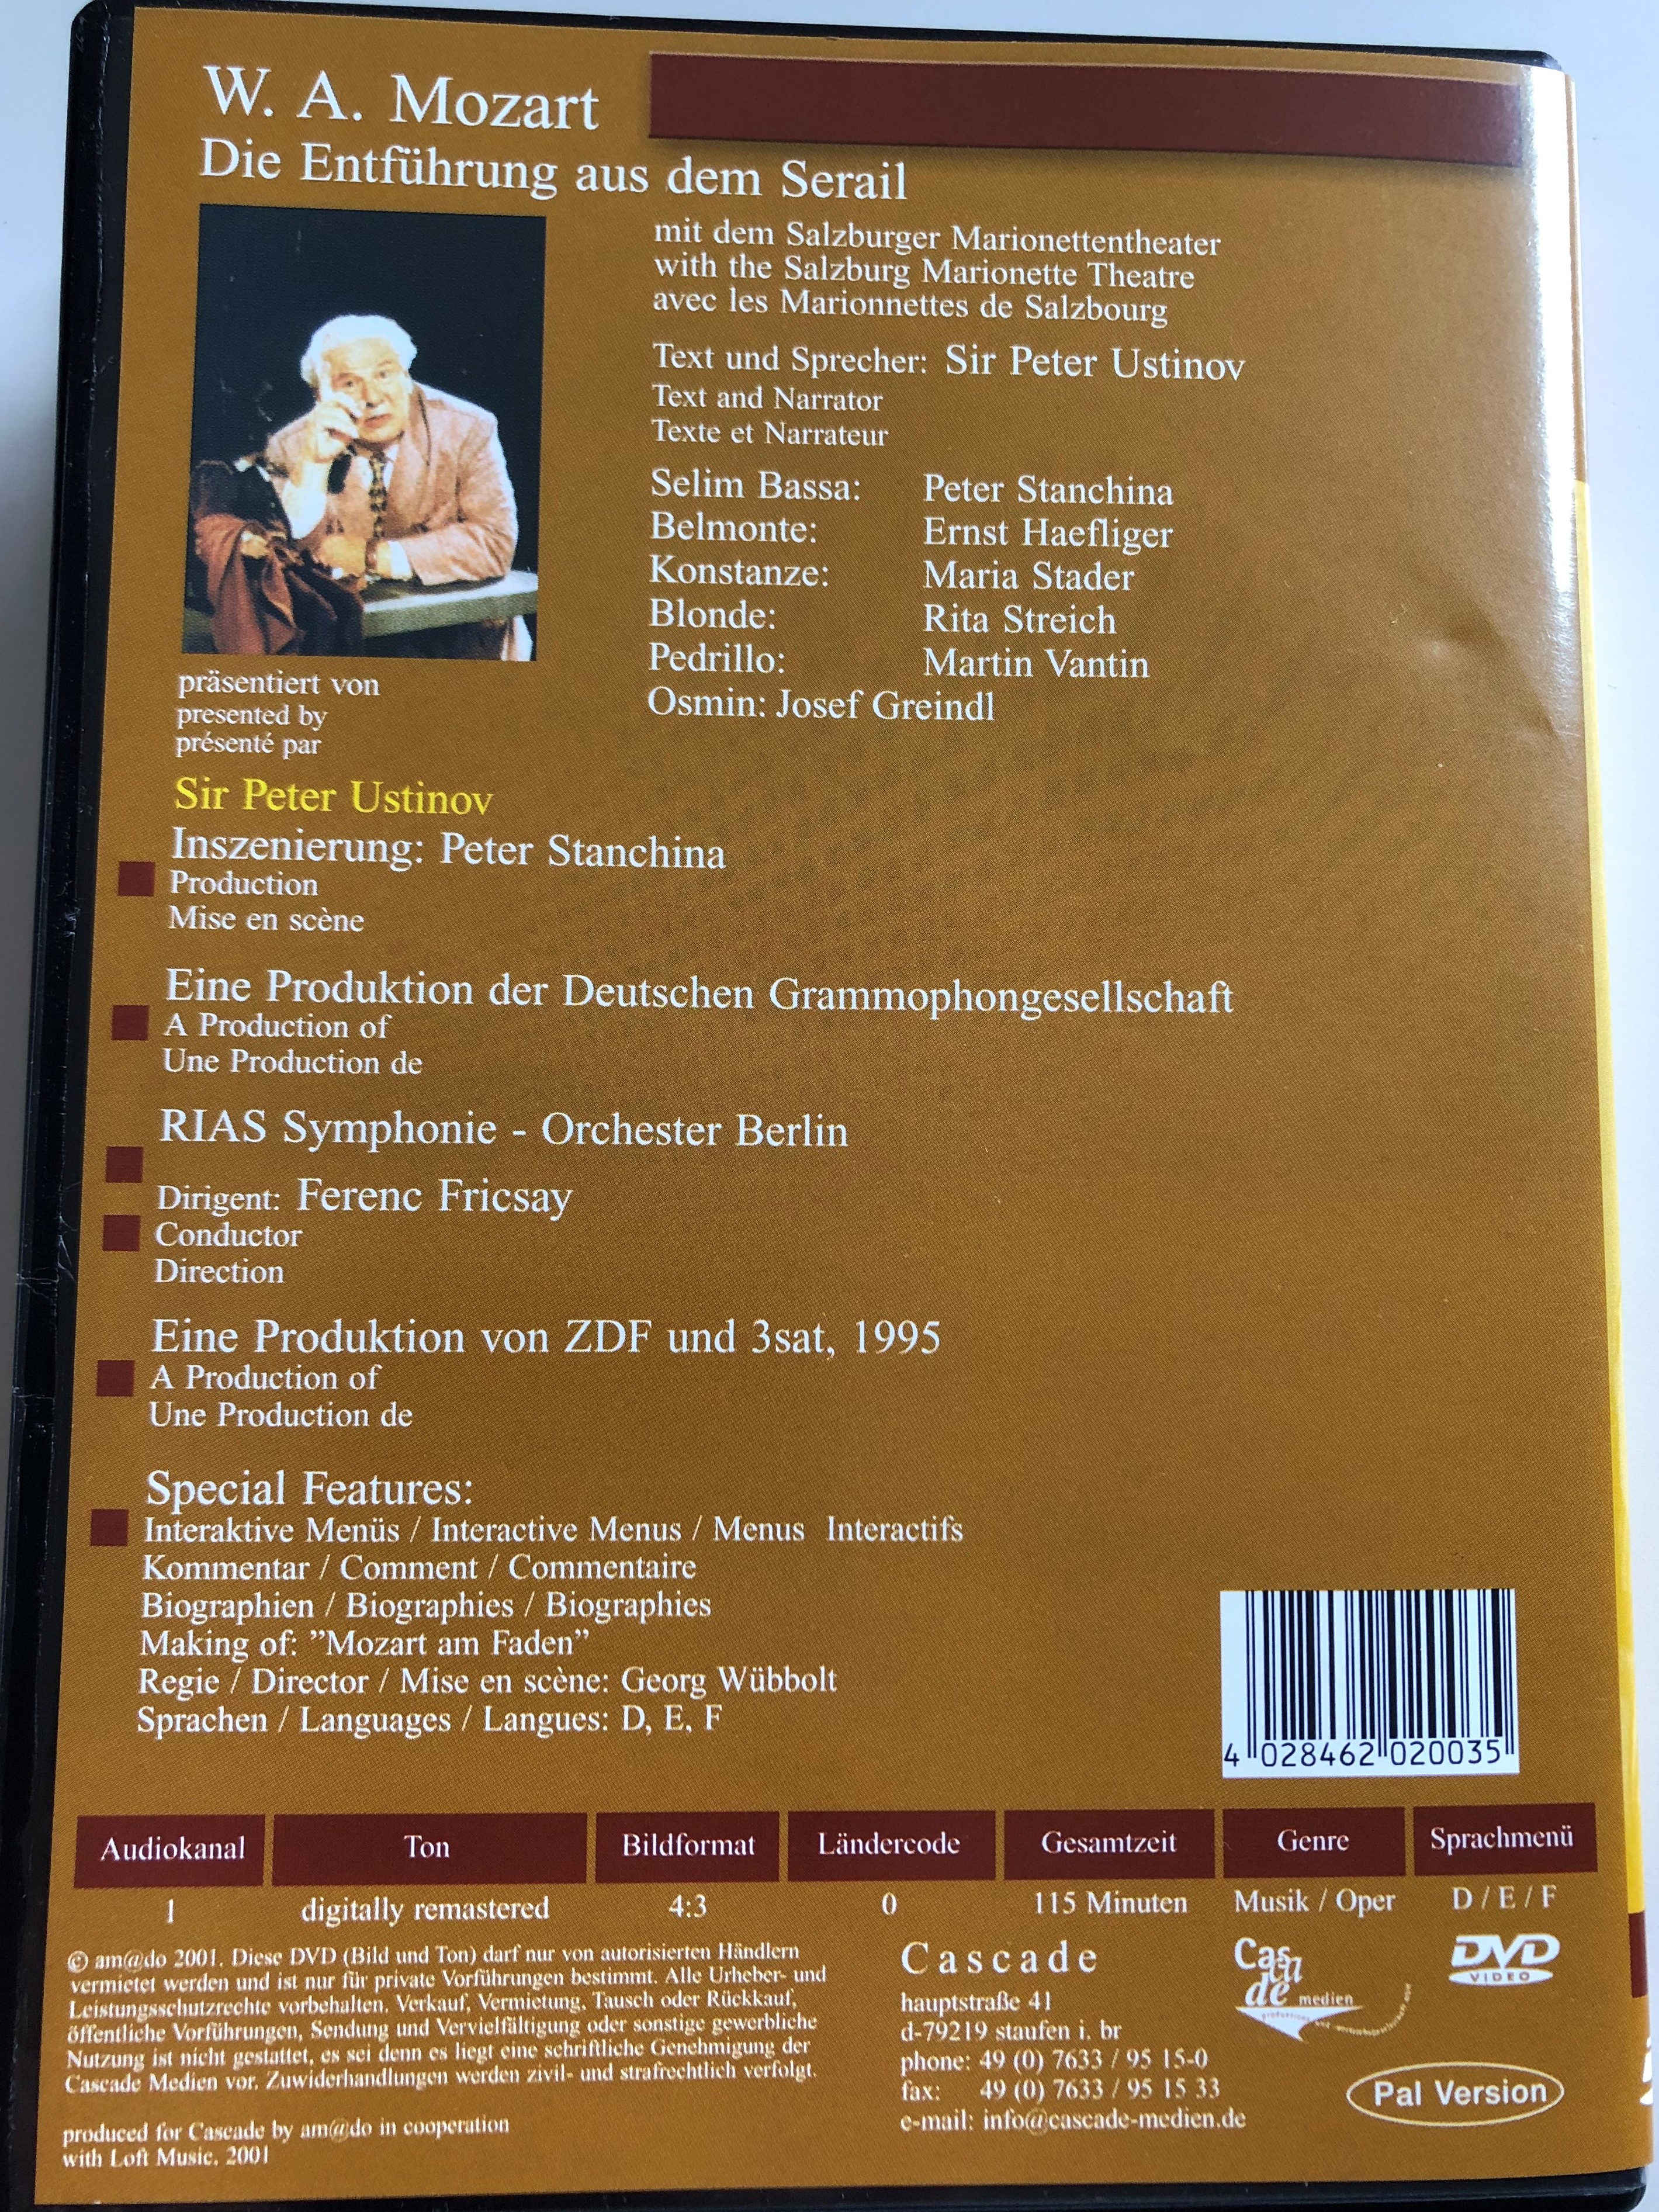 w.a.-mozart-die-entf-hrung-aus-dem-serail-dvd-2001-the-abduction-from-the-seraglio-l-enl-vement-au-s-rail-the-salzburg-marionette-theatre-rias-berlin-symphony-orchestra-conductor-ferenc-fricsay-am-do-dvd-classics-6357101-.jpg